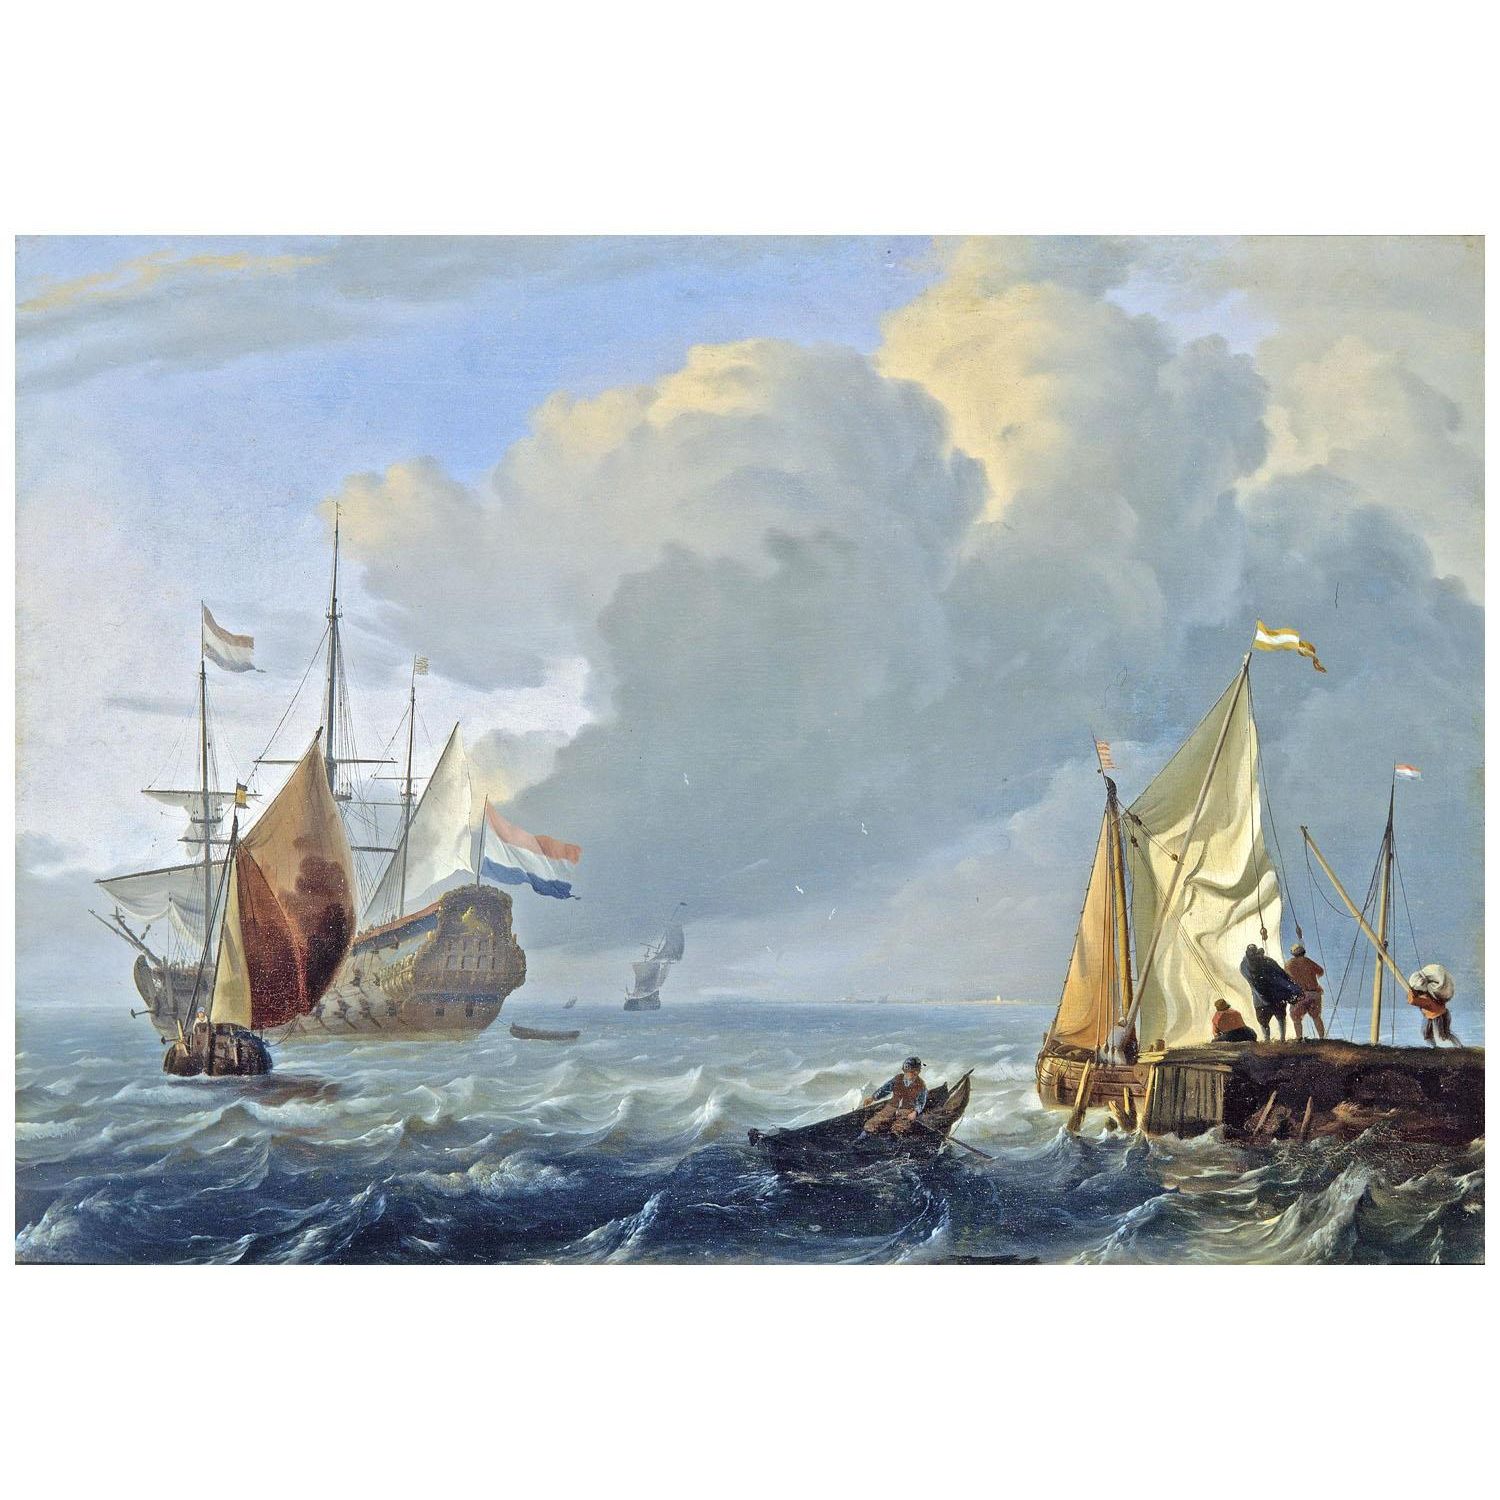 Ludolf Backhuysen. Dutch Frigate and Other Ships off the Coast. 1680. Kunsthalle Bremen